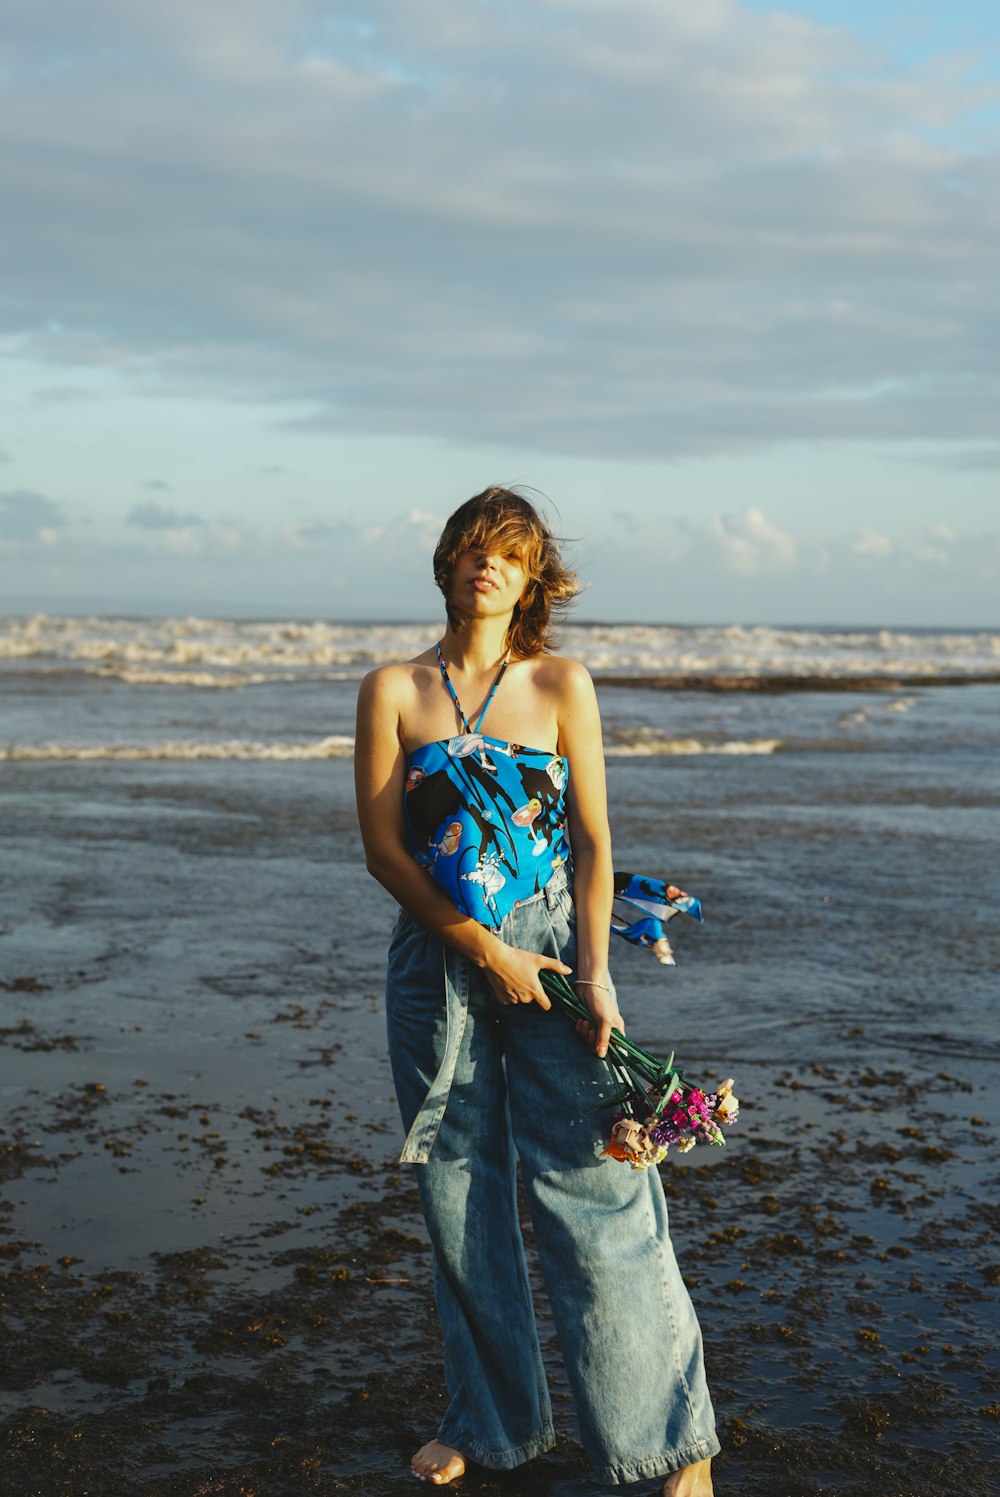 a person in a blue dress on a beach